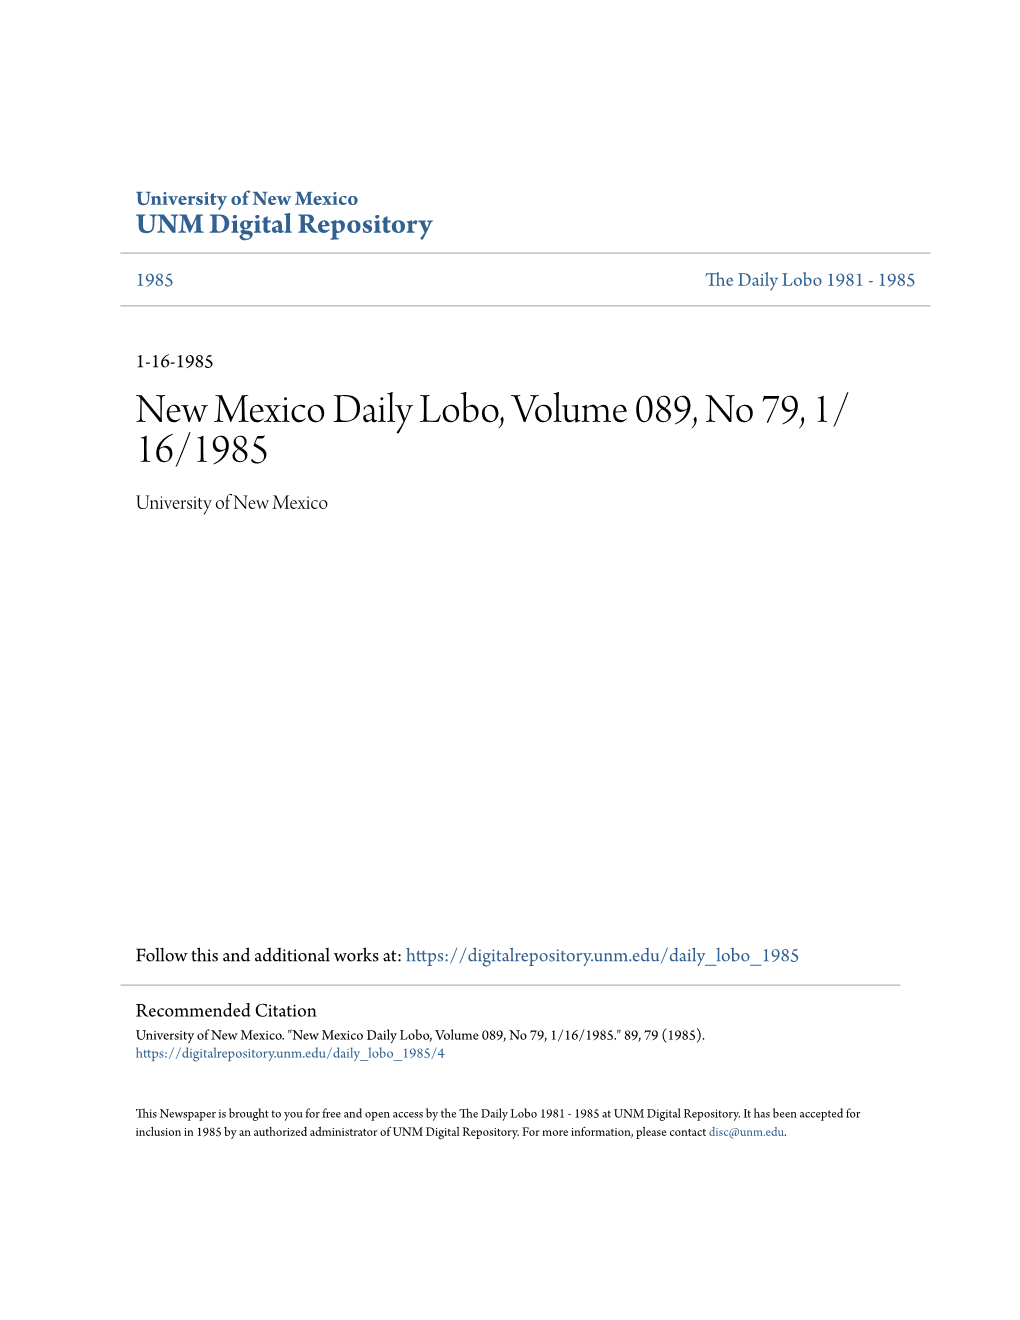 New Mexico Daily Lobo, Volume 089, No 79, 1/16/1985." 89, 79 (1985)